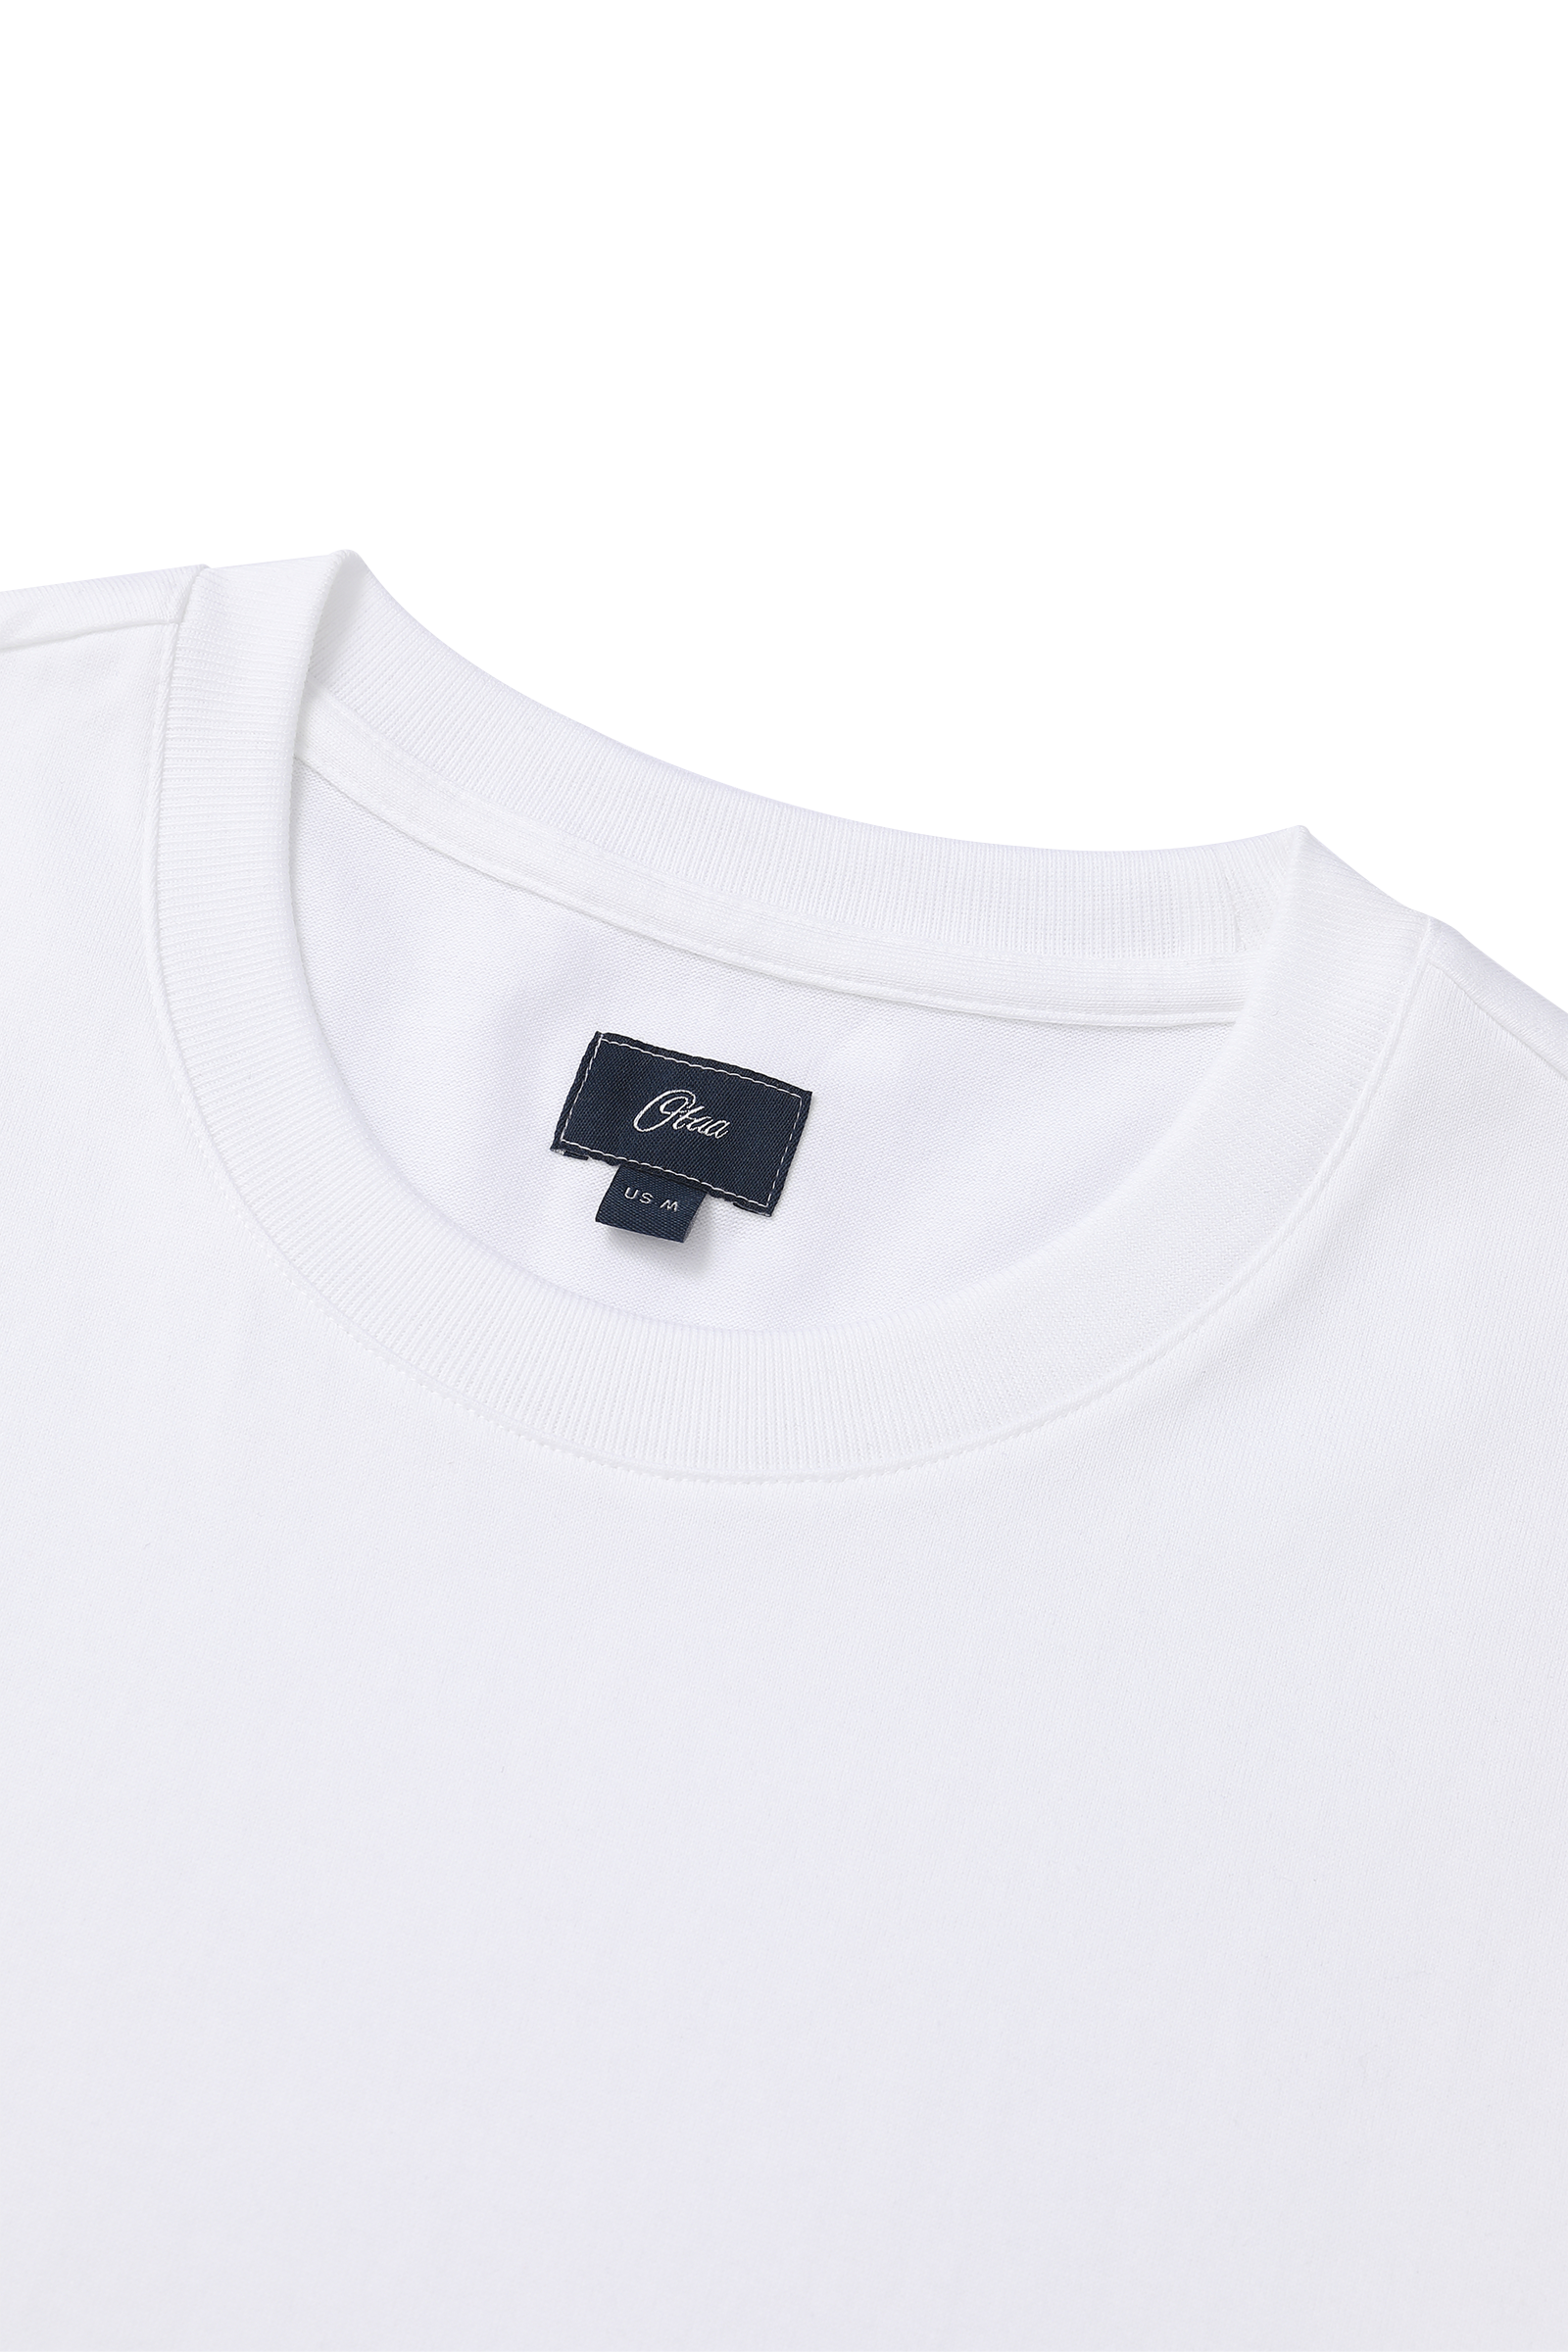 White Slim Fit T-Shirt